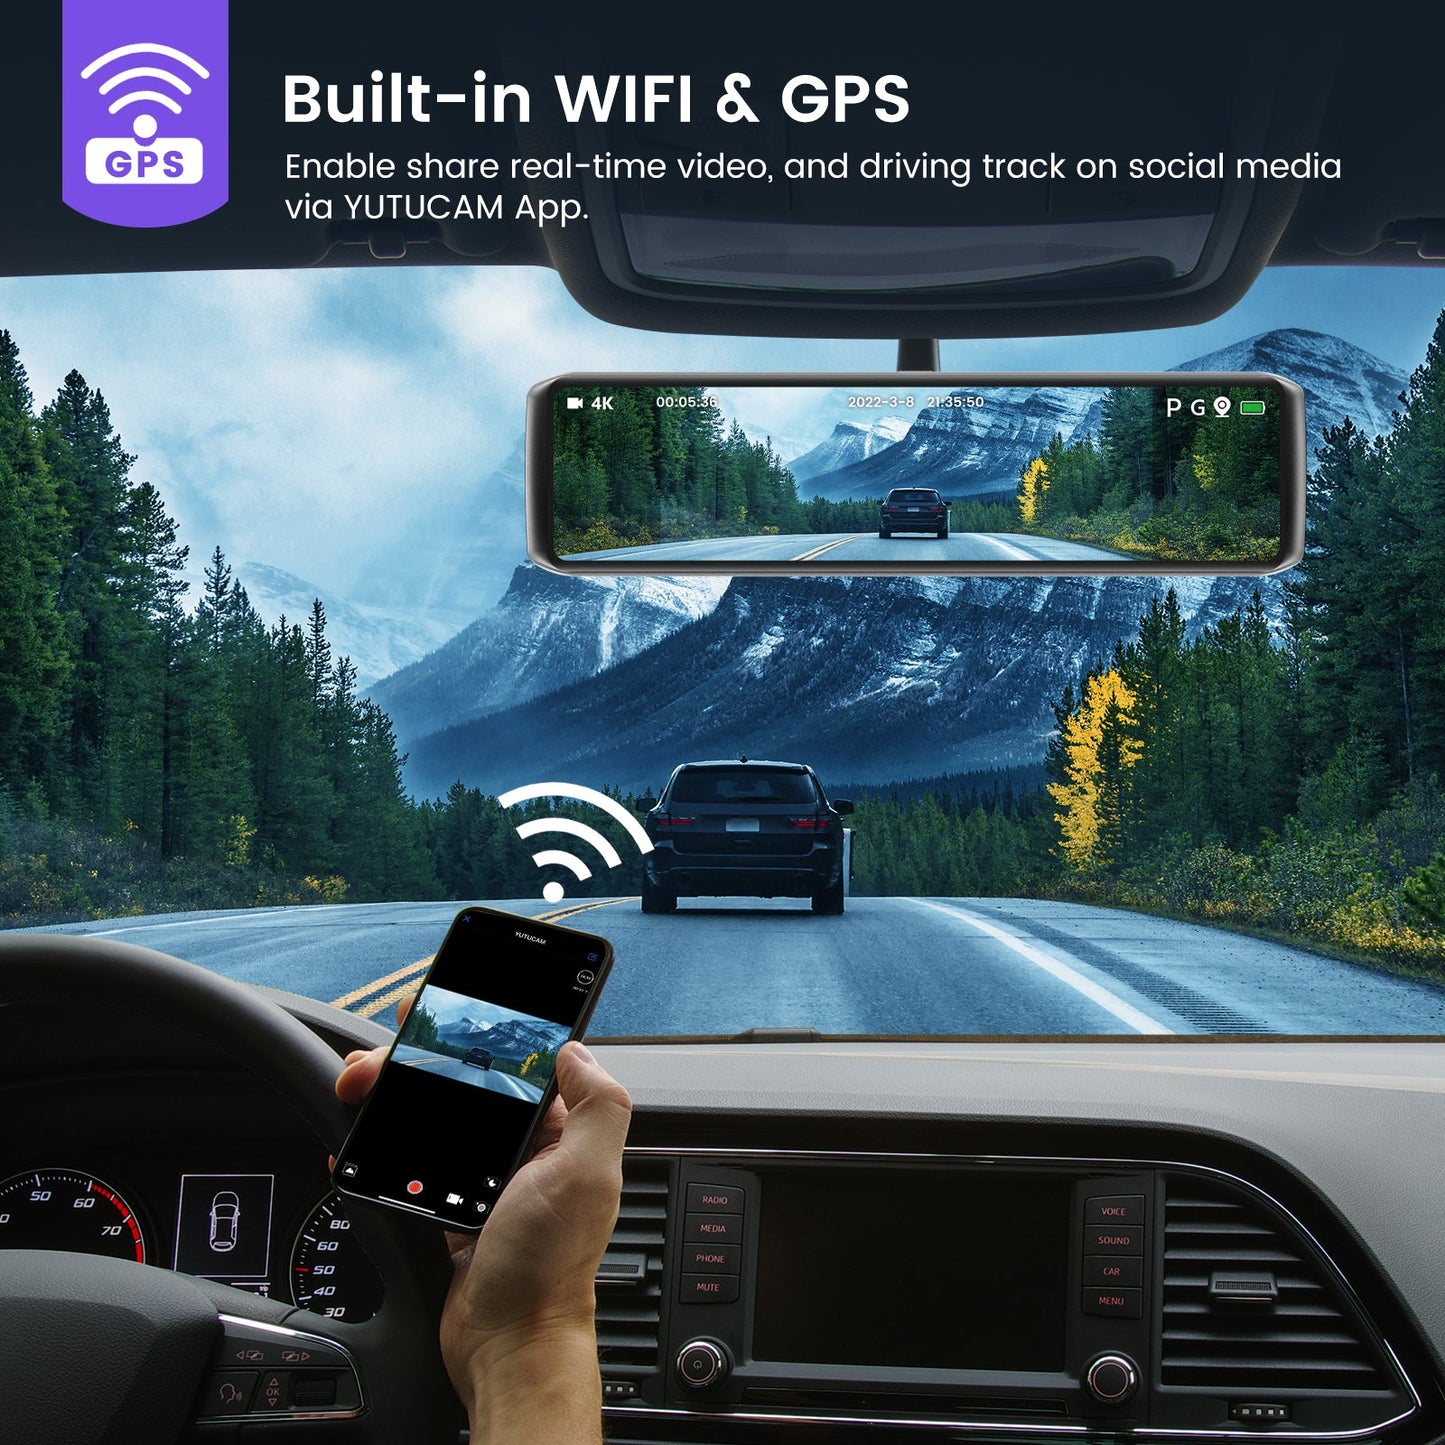 4k wifi app contral gps car